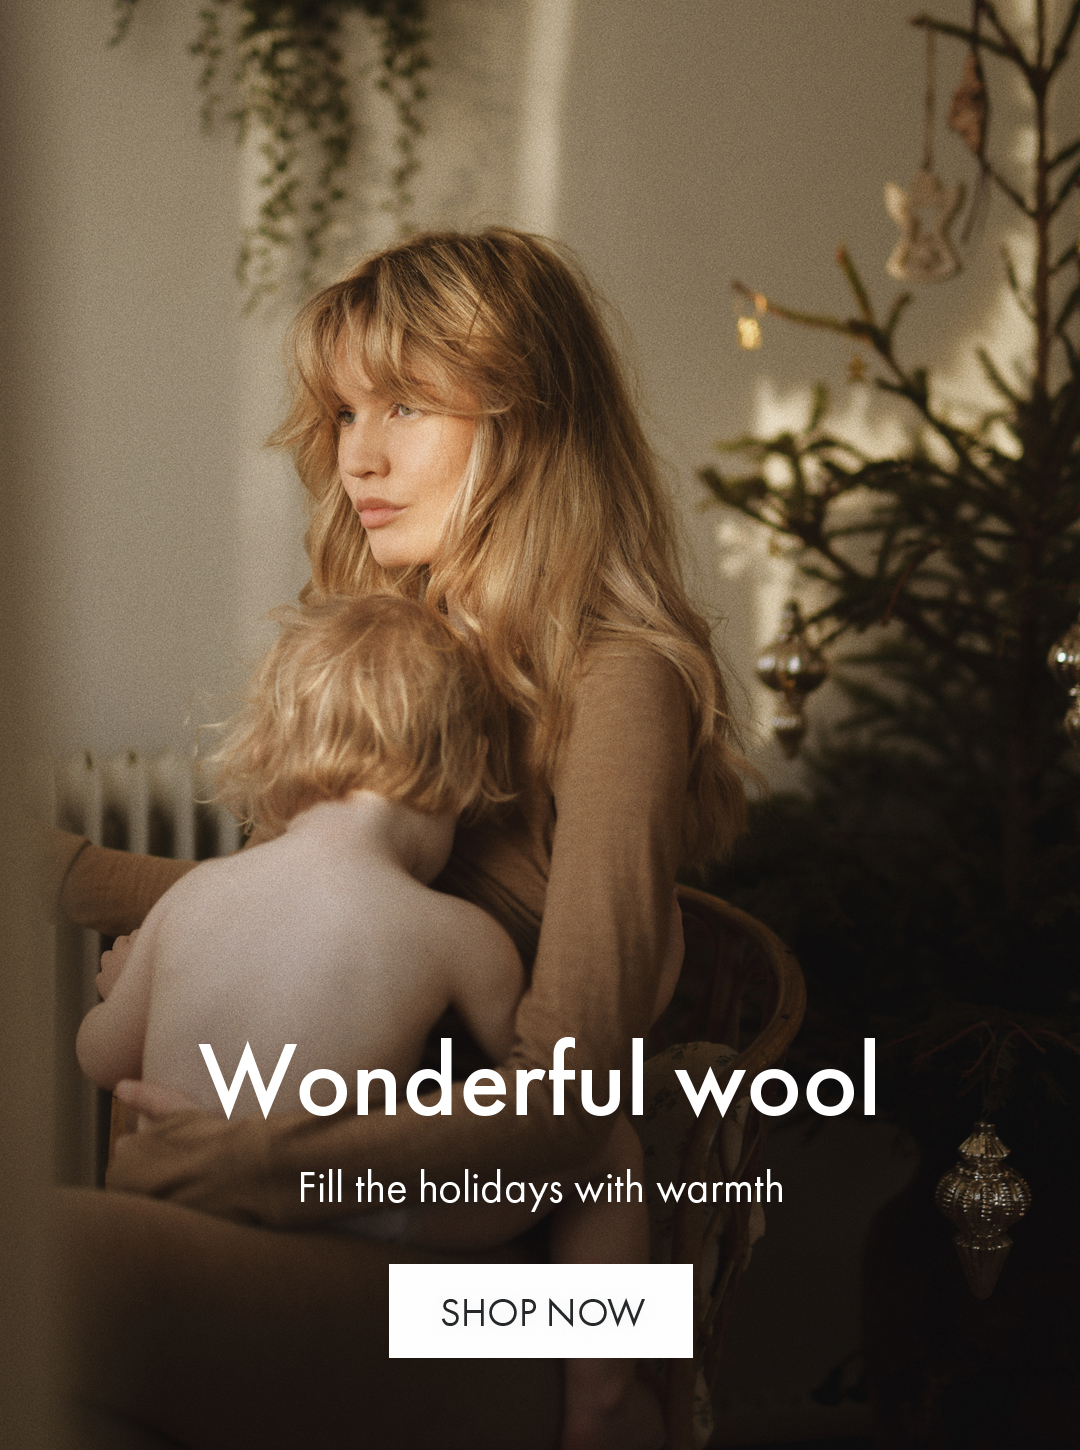 Wonderful wool